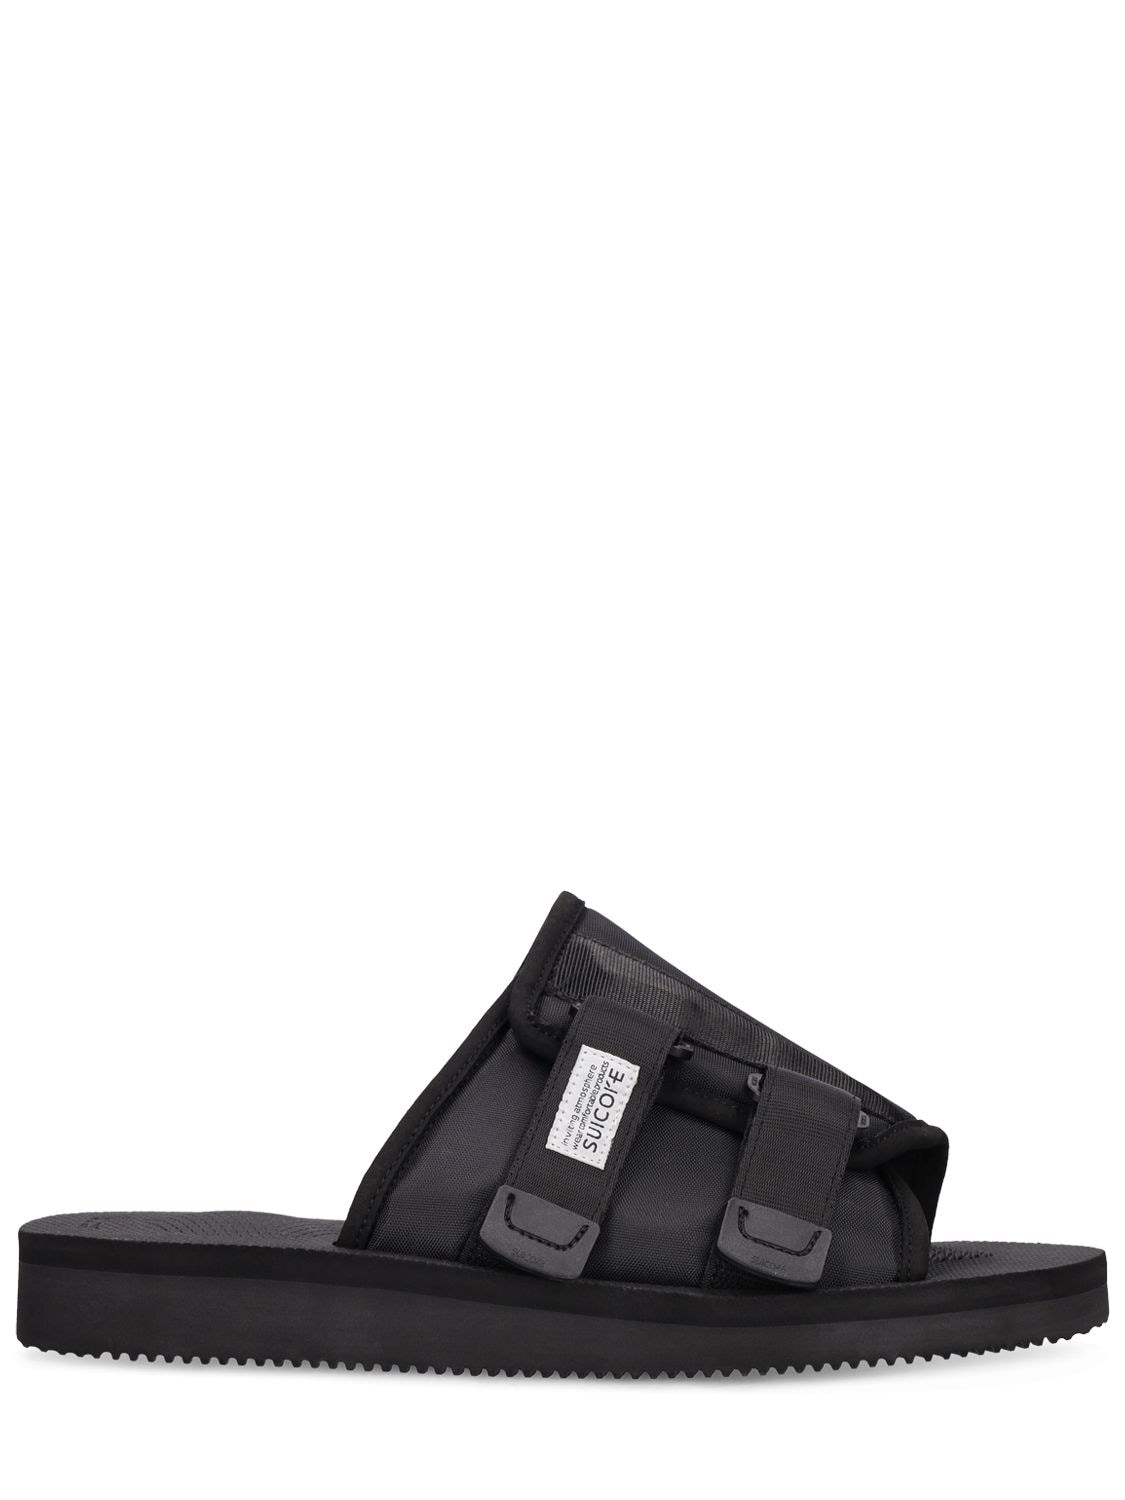 Suicoke Kaw-cab Slide Sandals In Black